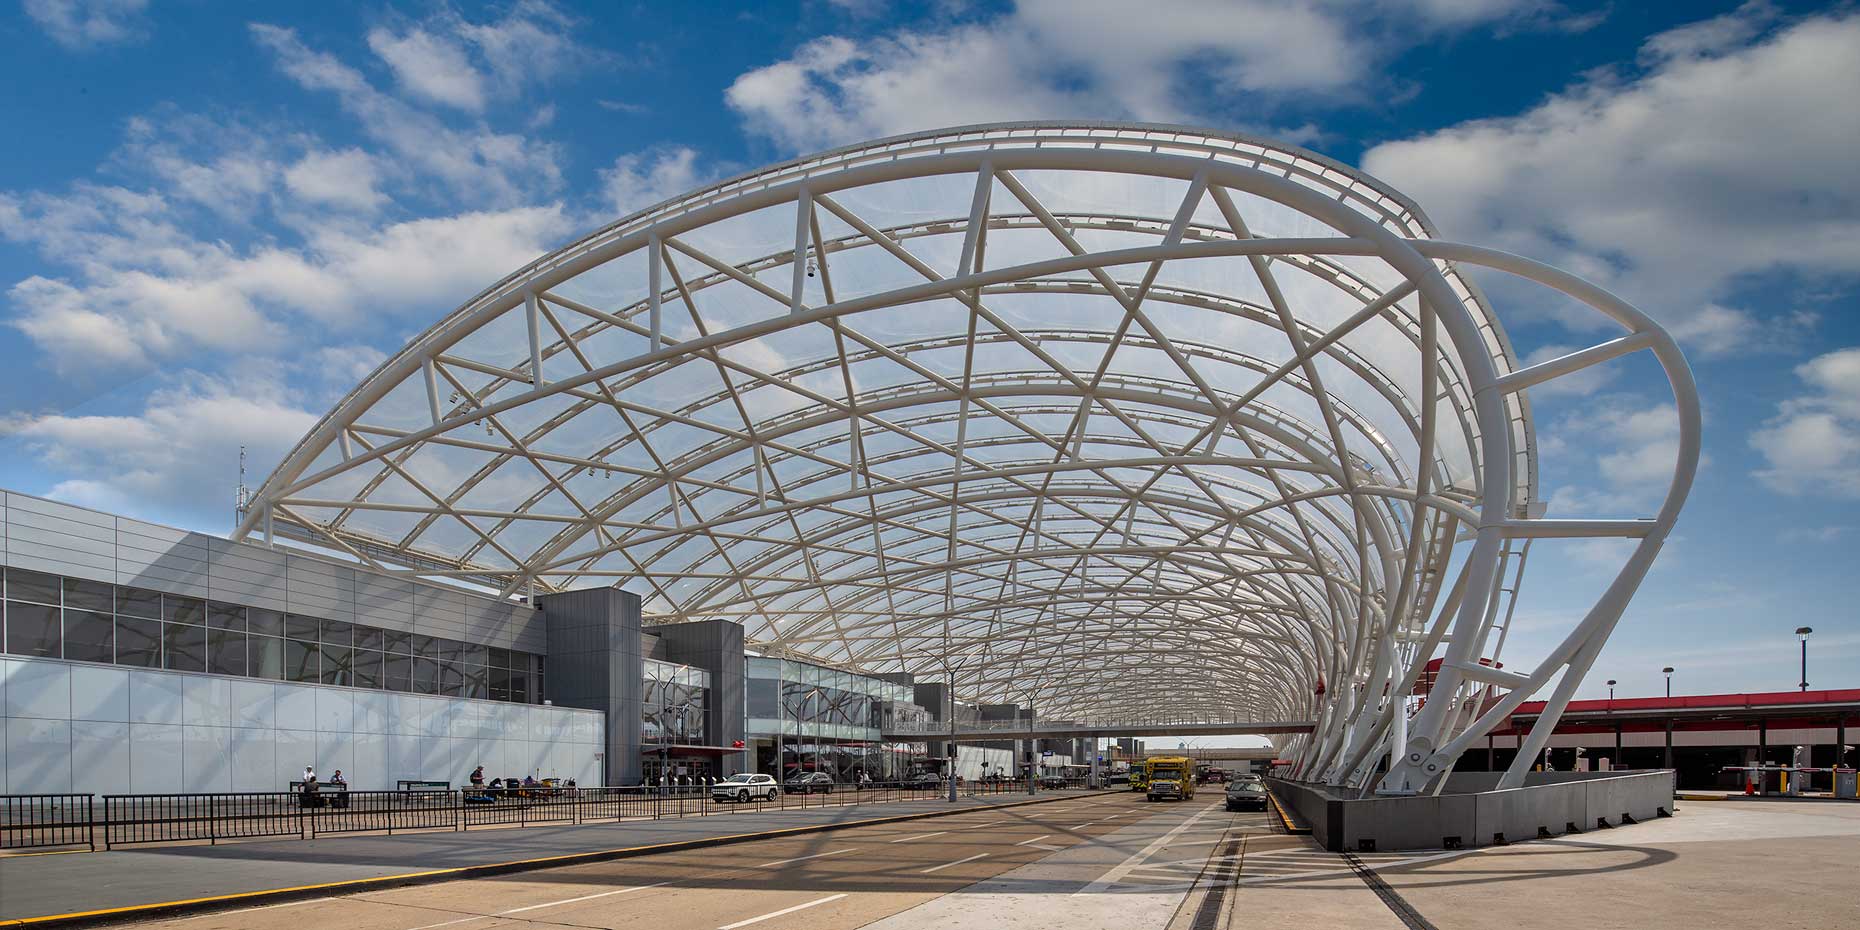 The South Terminal canopy at Hartsfield Jackson Atlanta International Airport